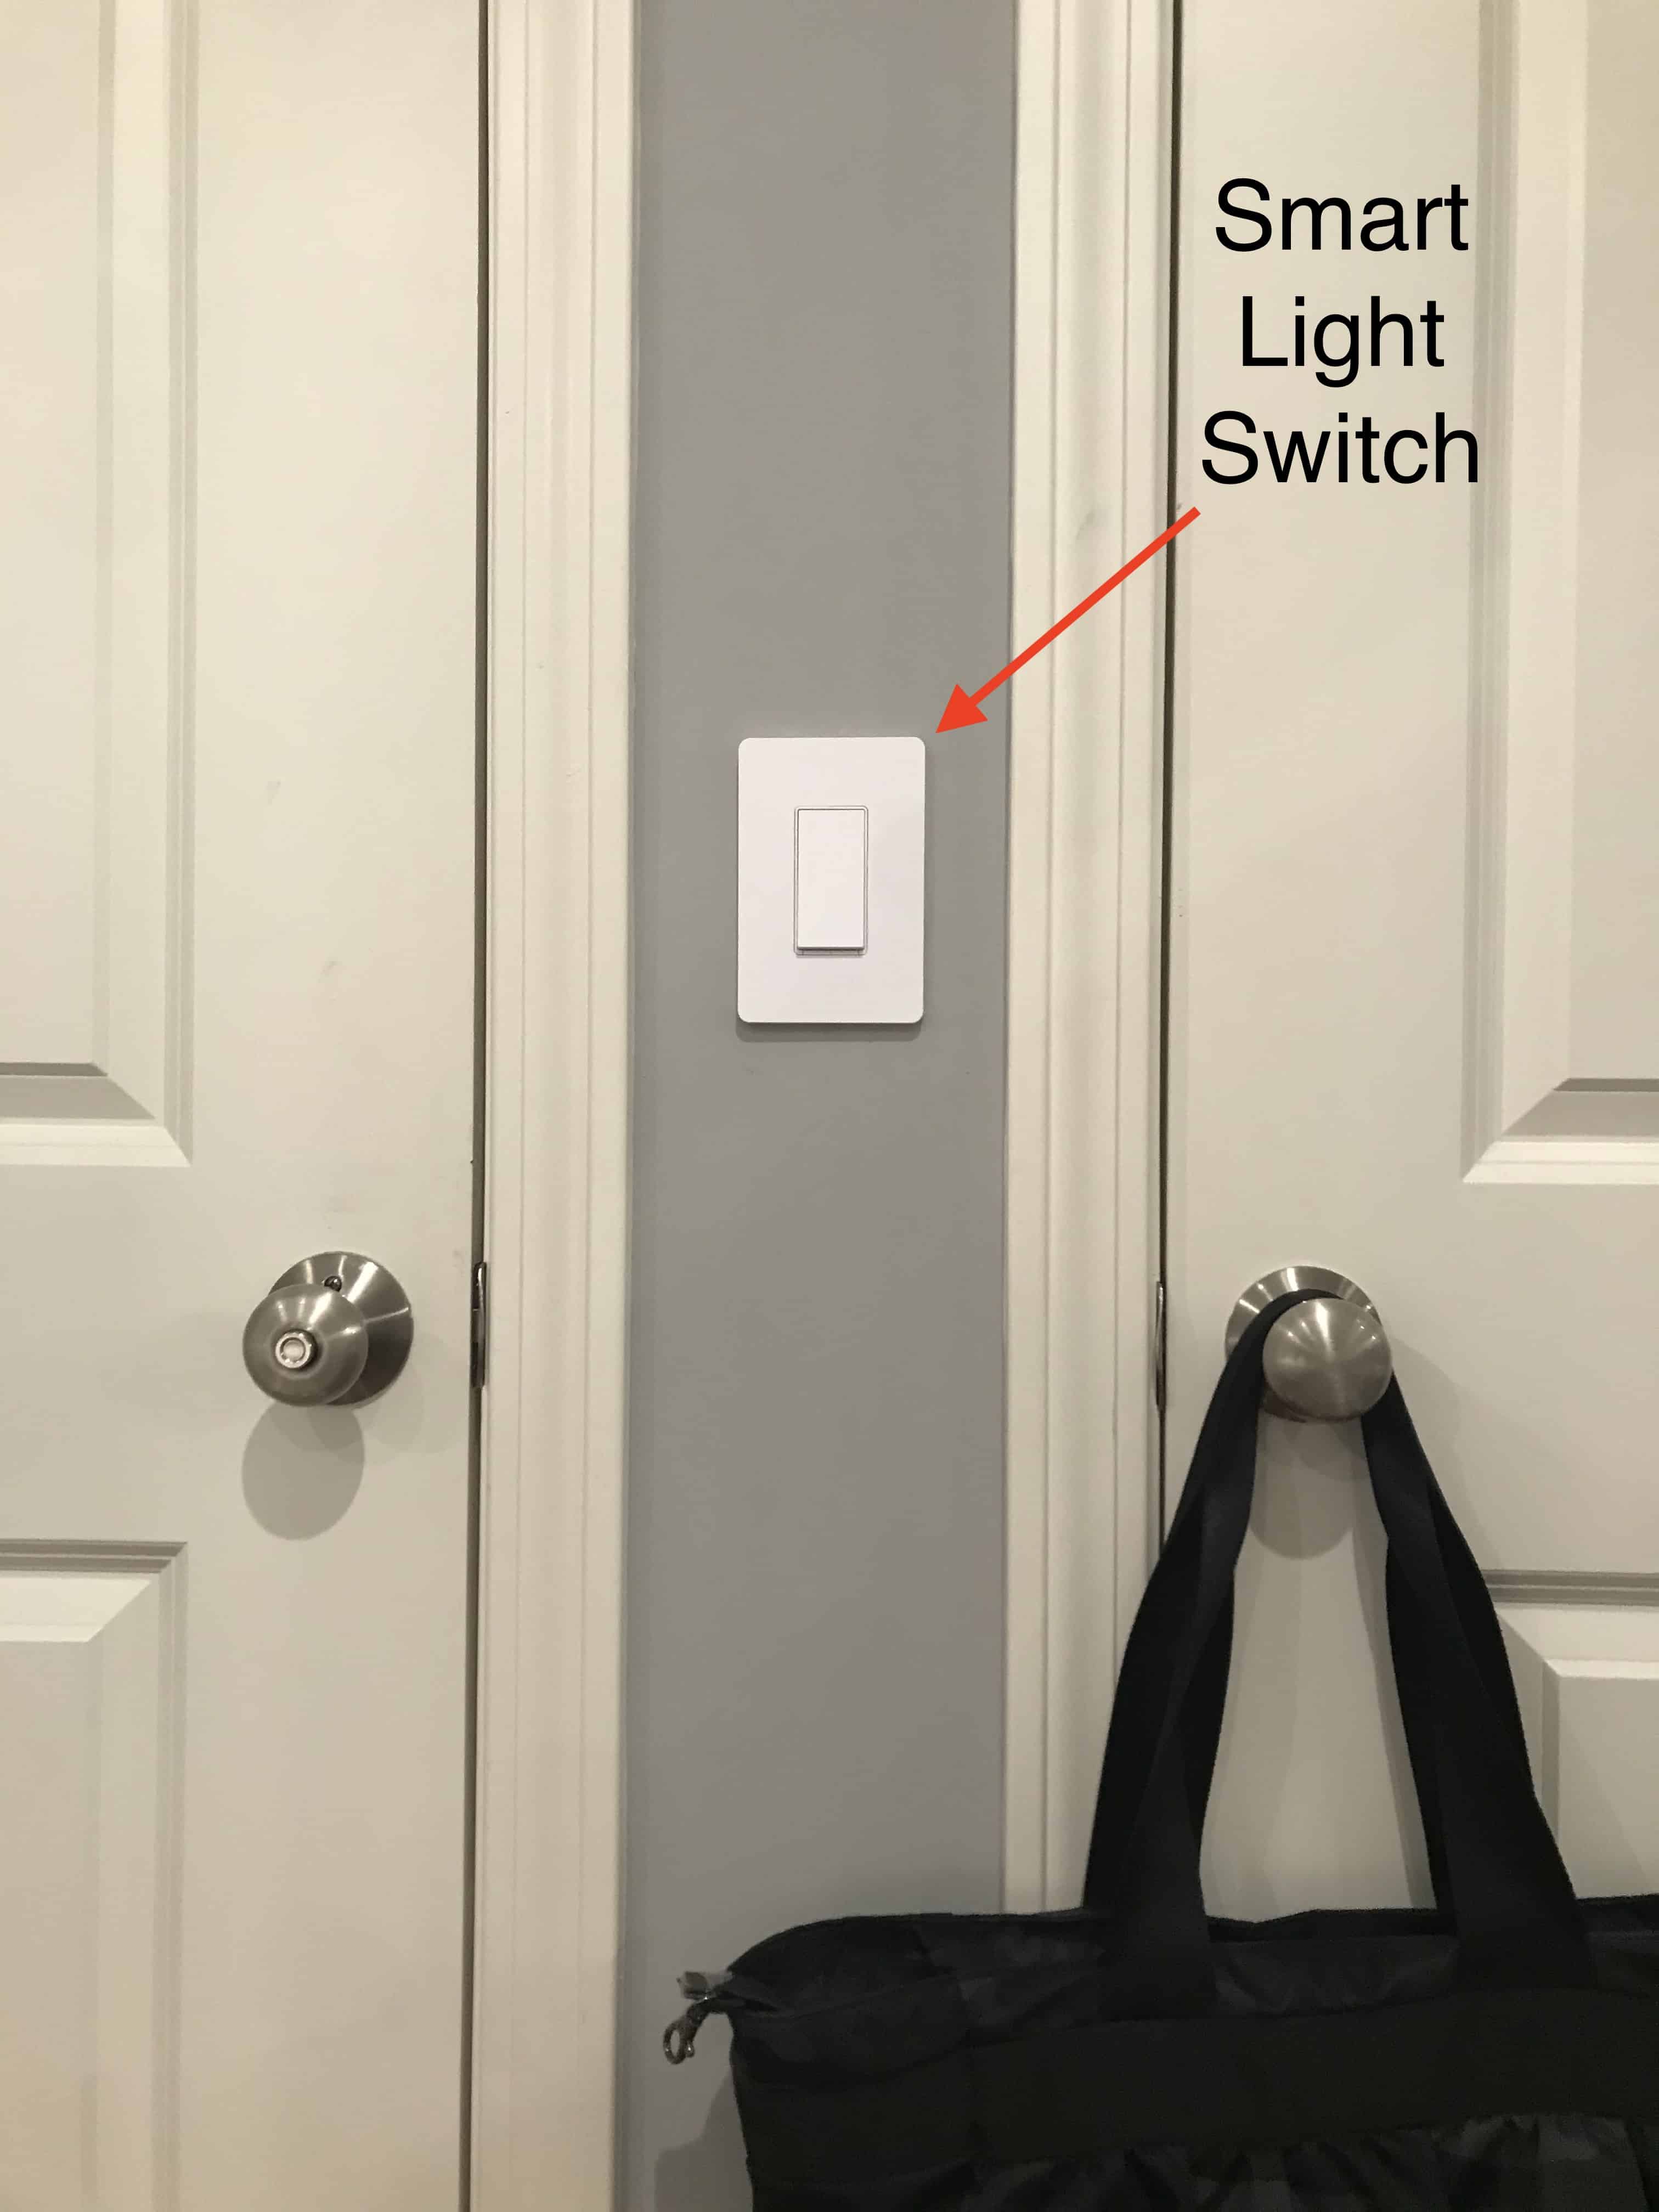 smart light switch turn on bedroom light